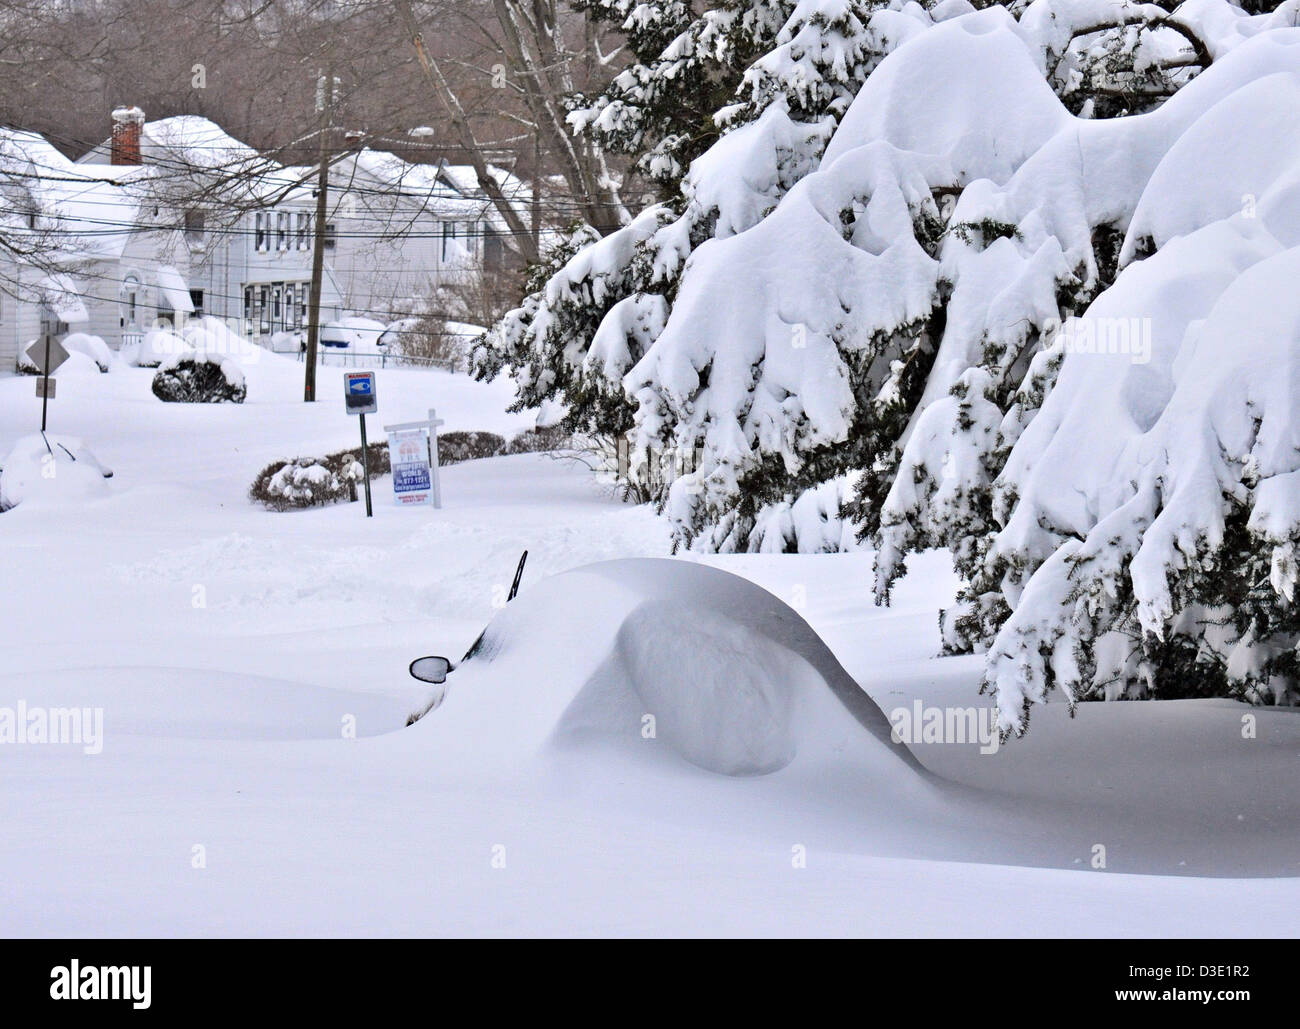 Coches cargados de nieve después de Blizzard Nemo golpeó a Connecticut, nevadas récord de dumping. Se declaró un estado de emergencia después de la tormenta Foto de stock